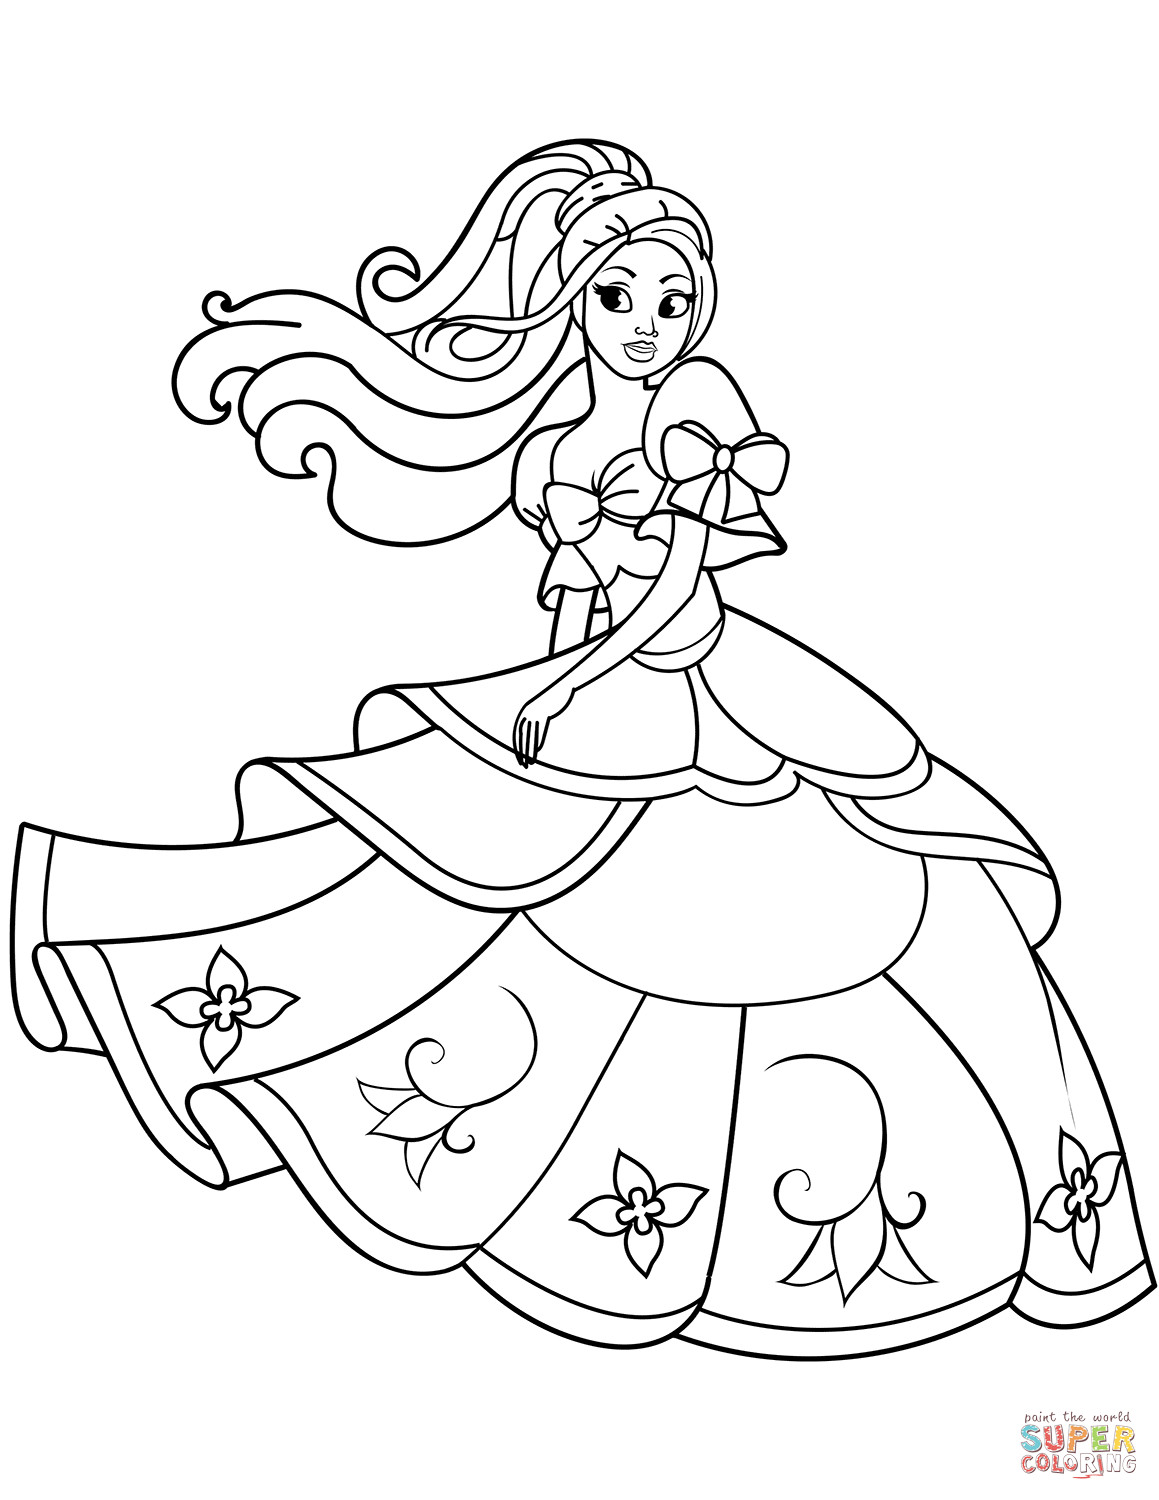 Printable Princess Coloring Pages
 Dancing Princess coloring page